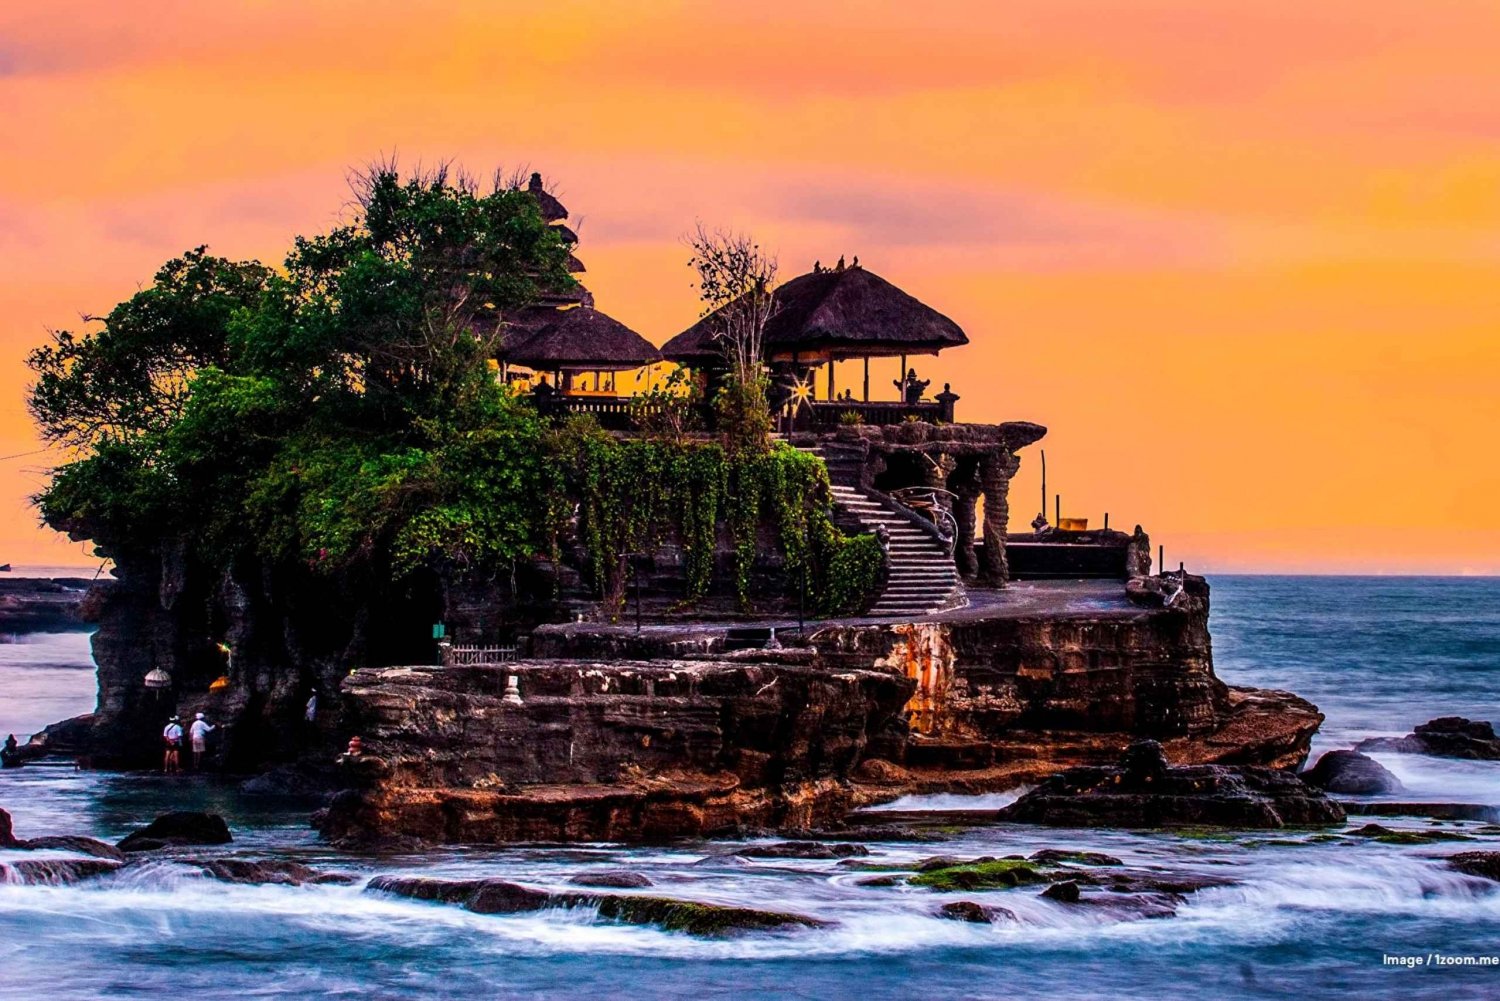 Bali: Ubud Wasserfall, Reisterrasse & Tanah Lot Sonnenuntergangstouren